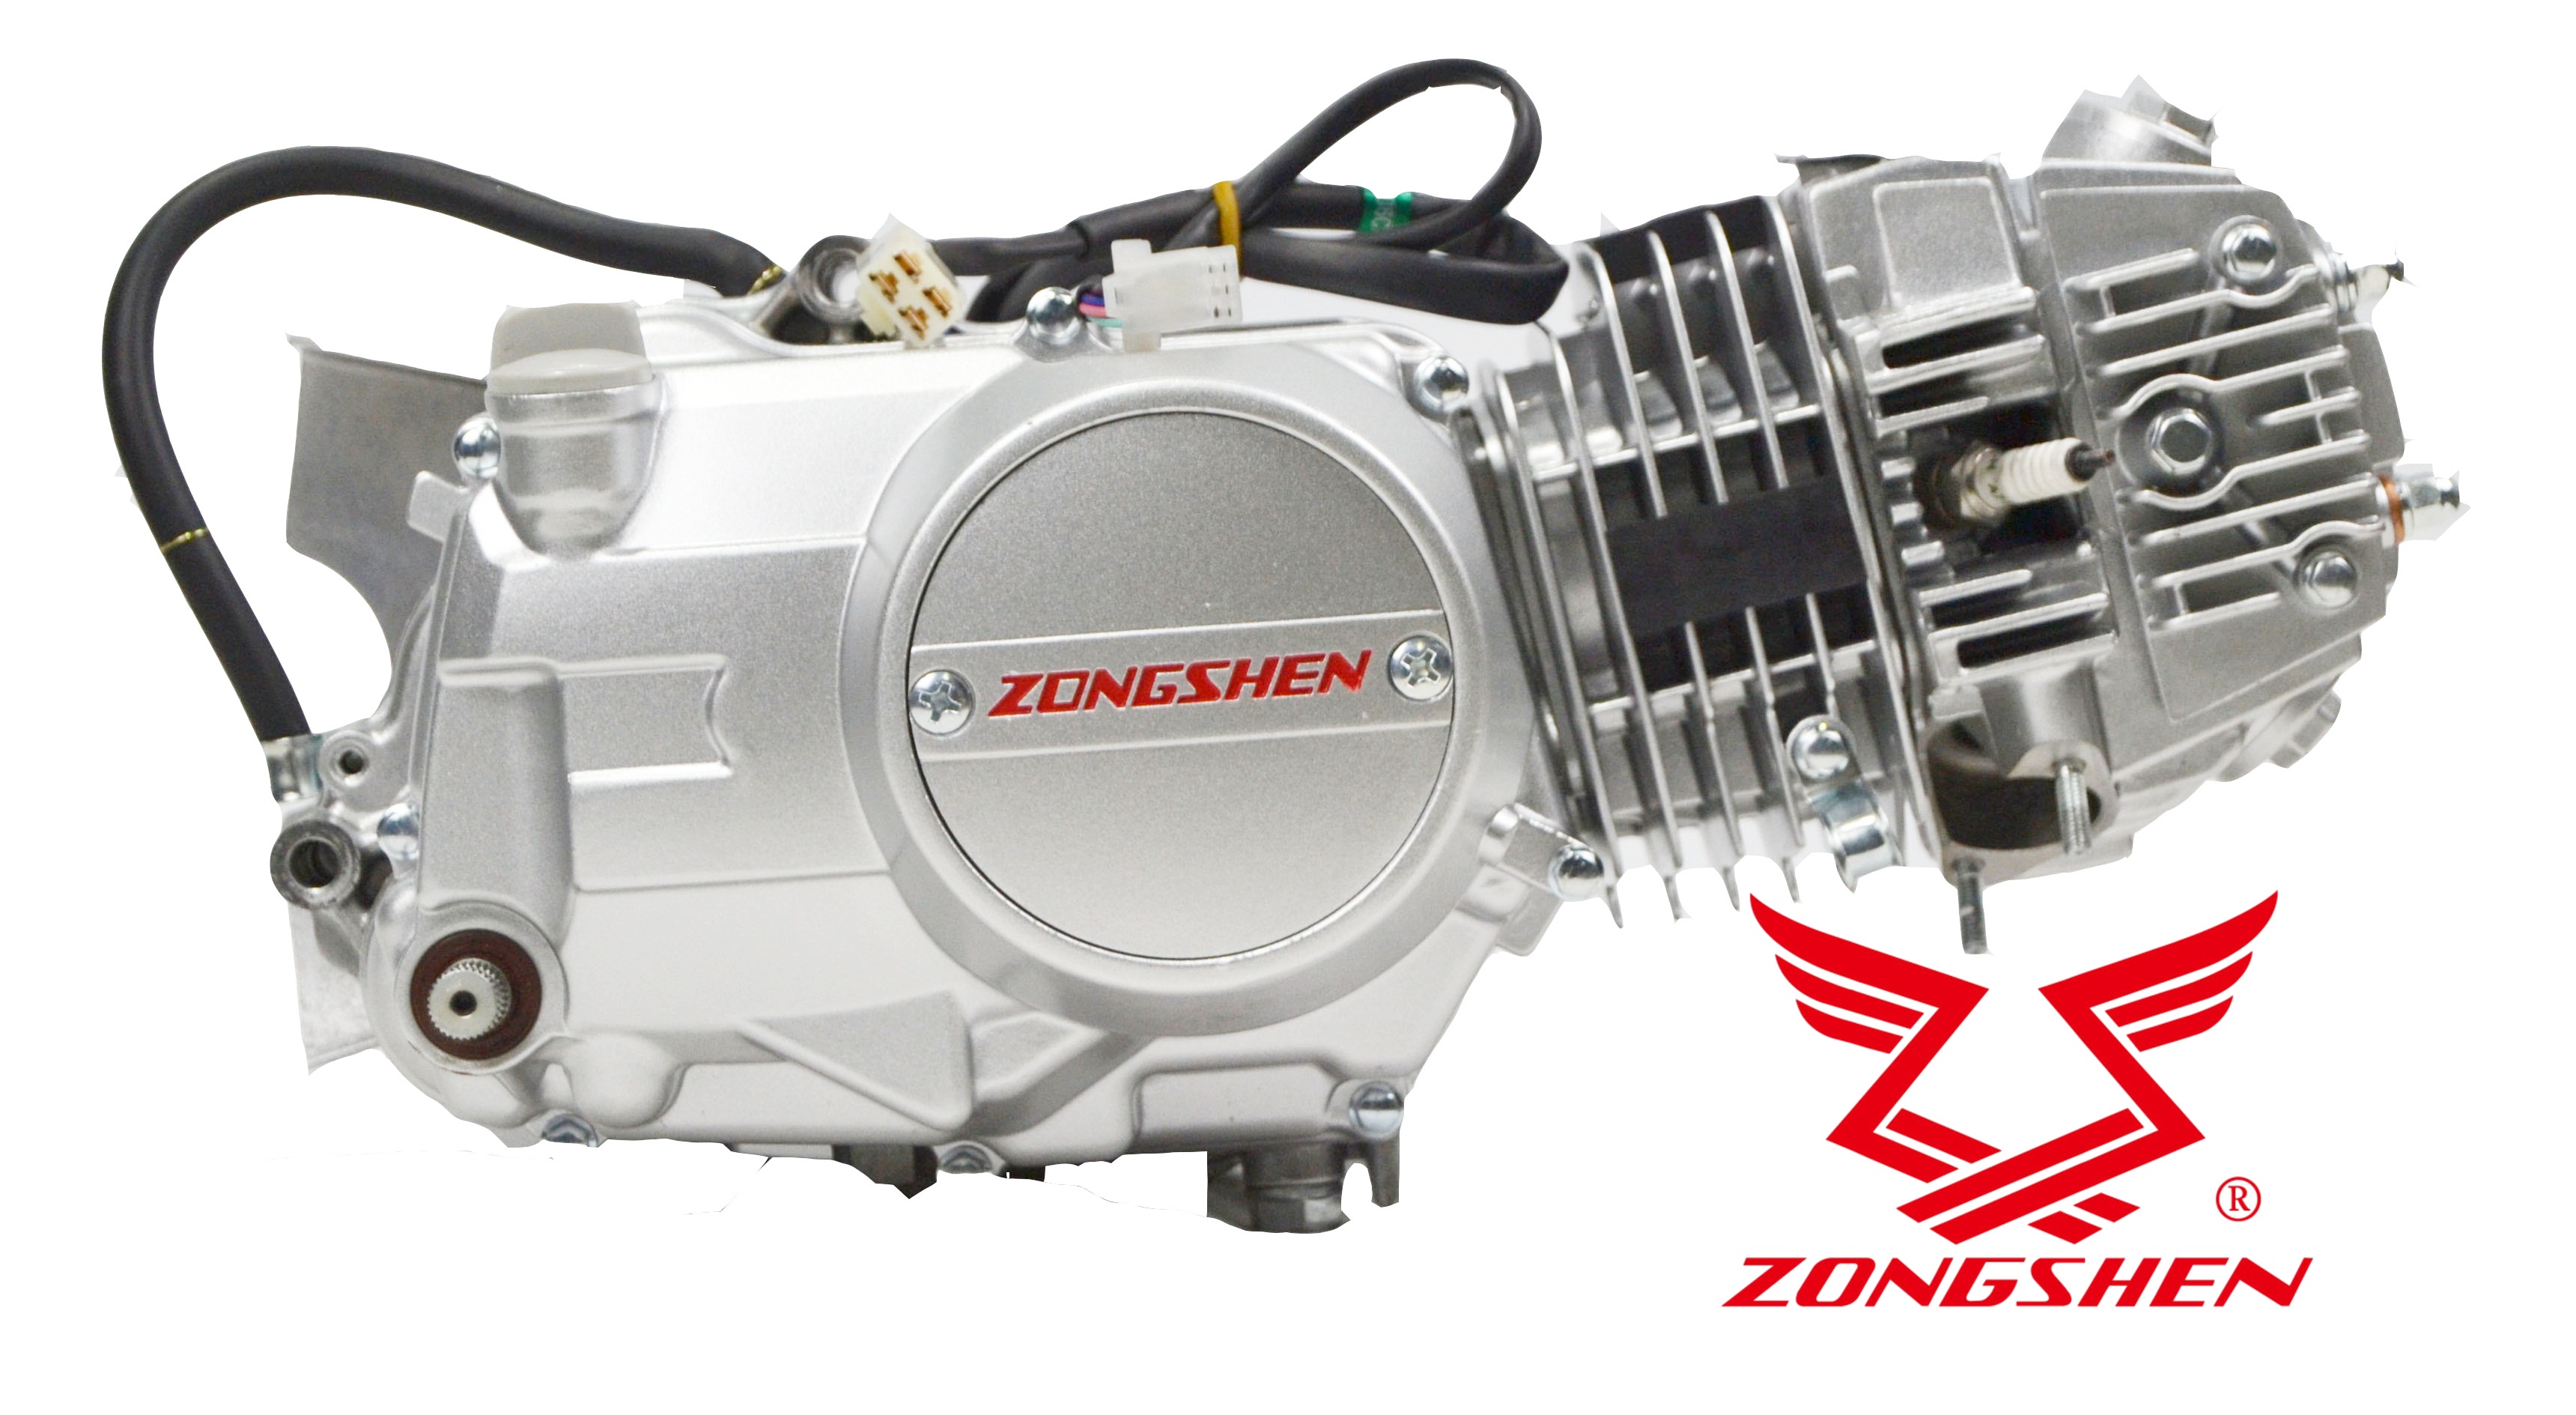 Zongshen Shop เครื่องยนต์มอไซค์ Zongshen (จงเซิน)(สเปคเครื่องลี่ฟาน LIFAN) 110ซีซี (สตาร์ทเท้า) ระบายความร้อนด้วยอากาศ ดับเบิ้ลออโตคลัทช์